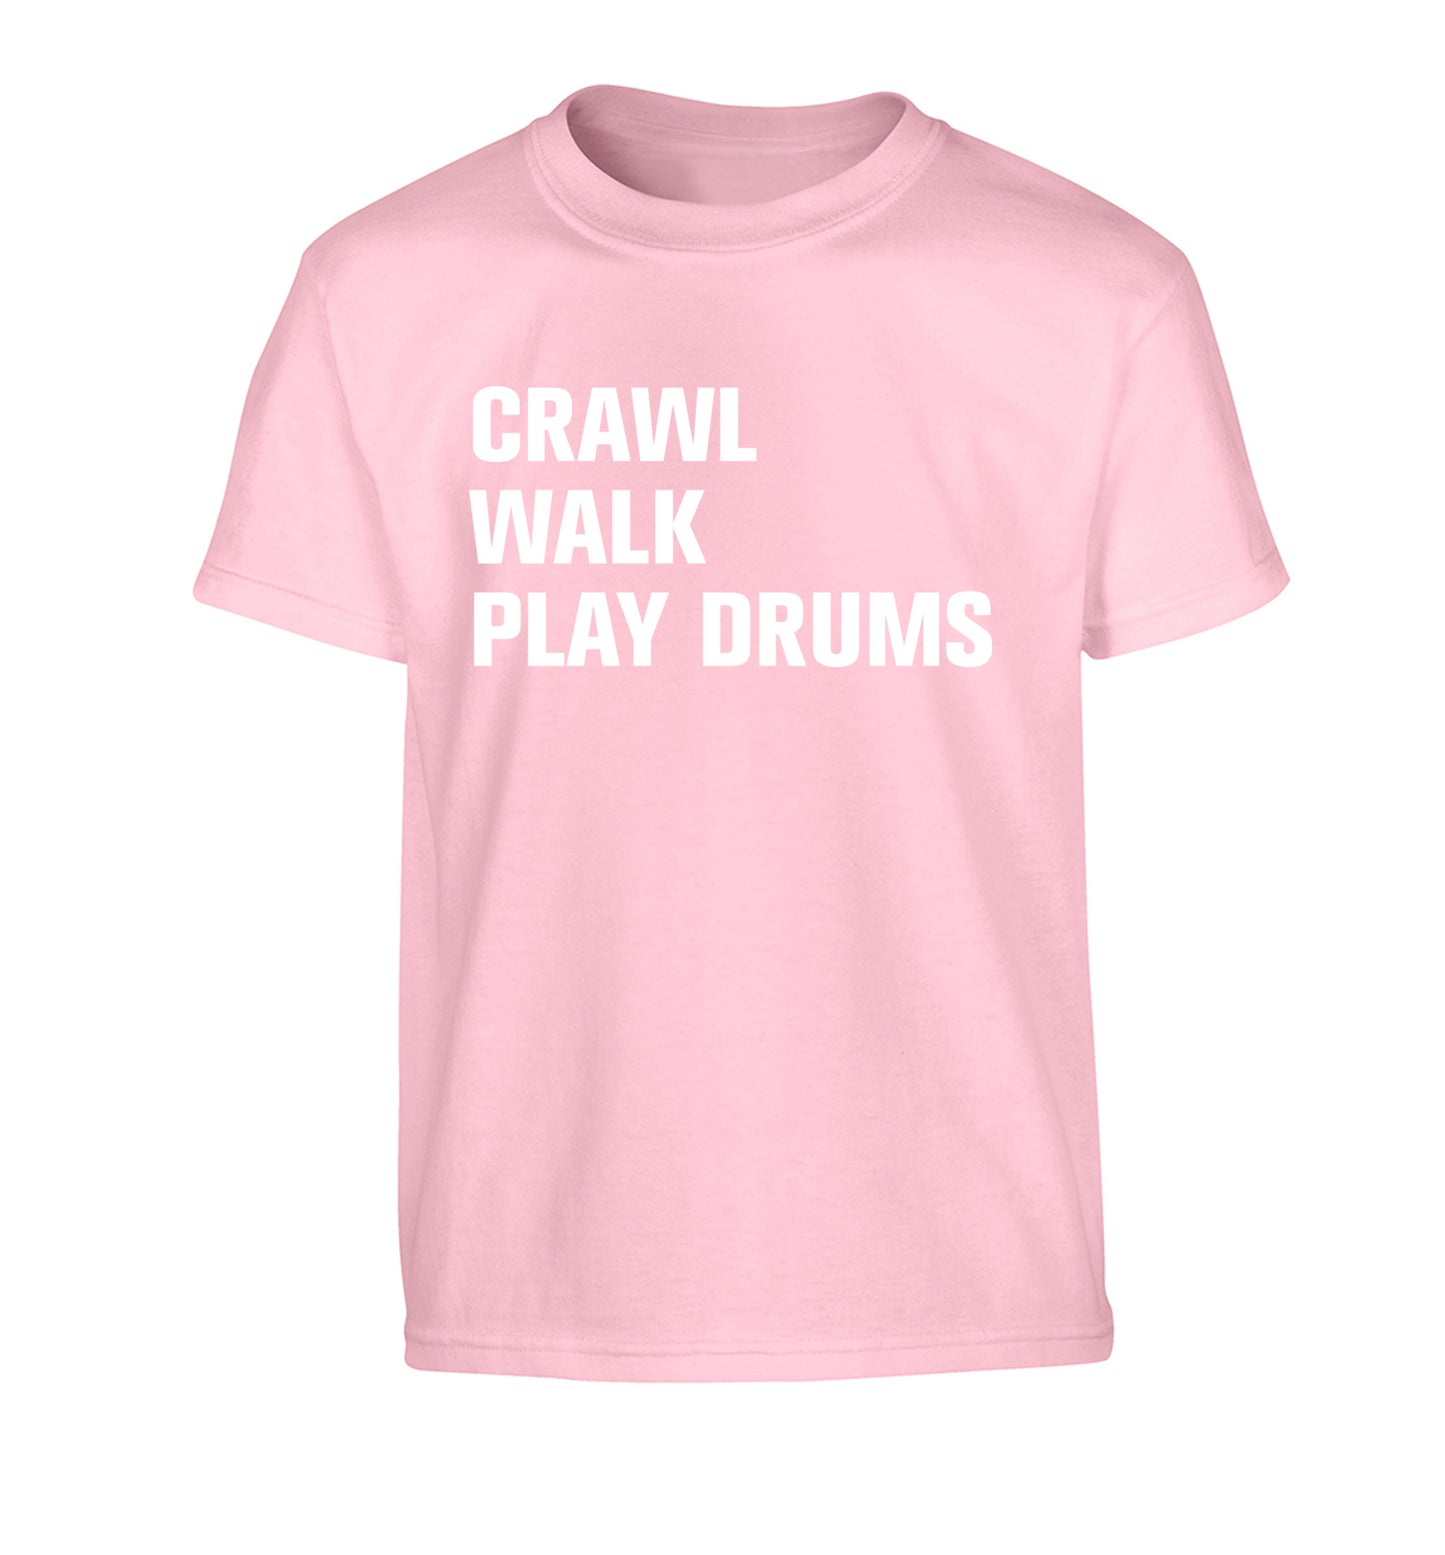 Crawl walk play drums Children's light pink Tshirt 12-13 Years